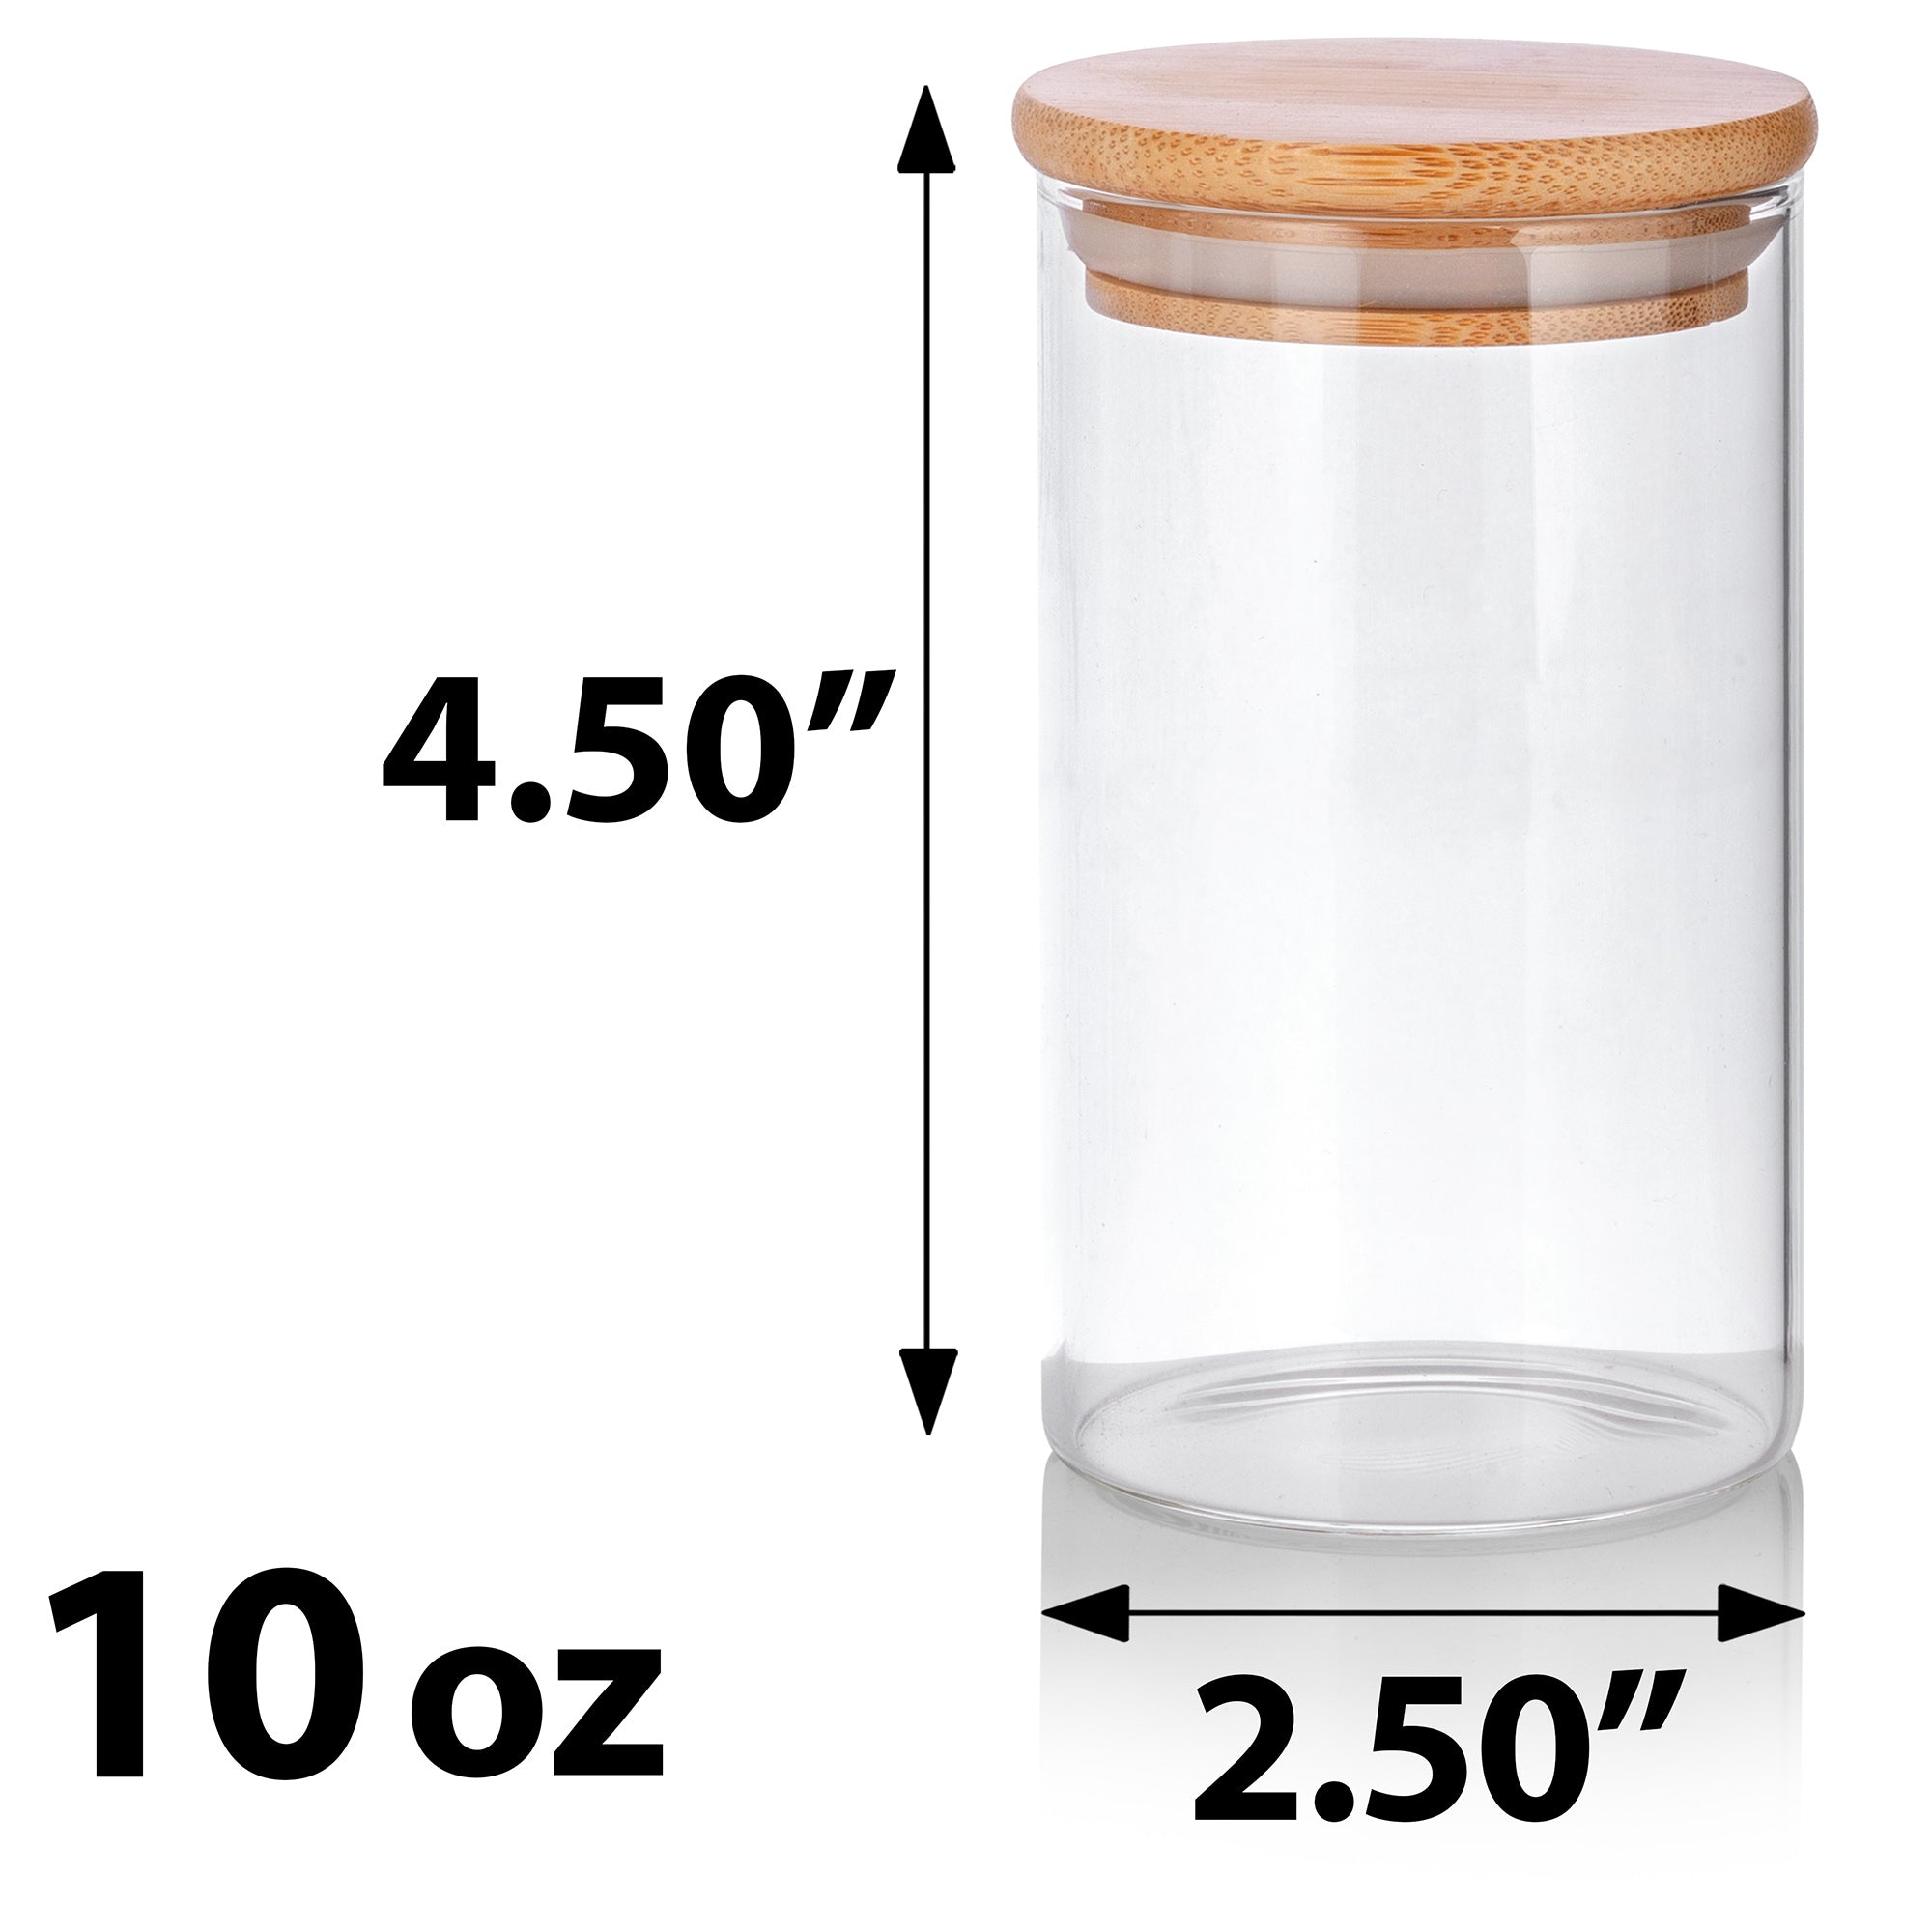 3300ml Borosilicate wholesale 10 gallon large glass jars containers,glass  jars containers,large glass jars